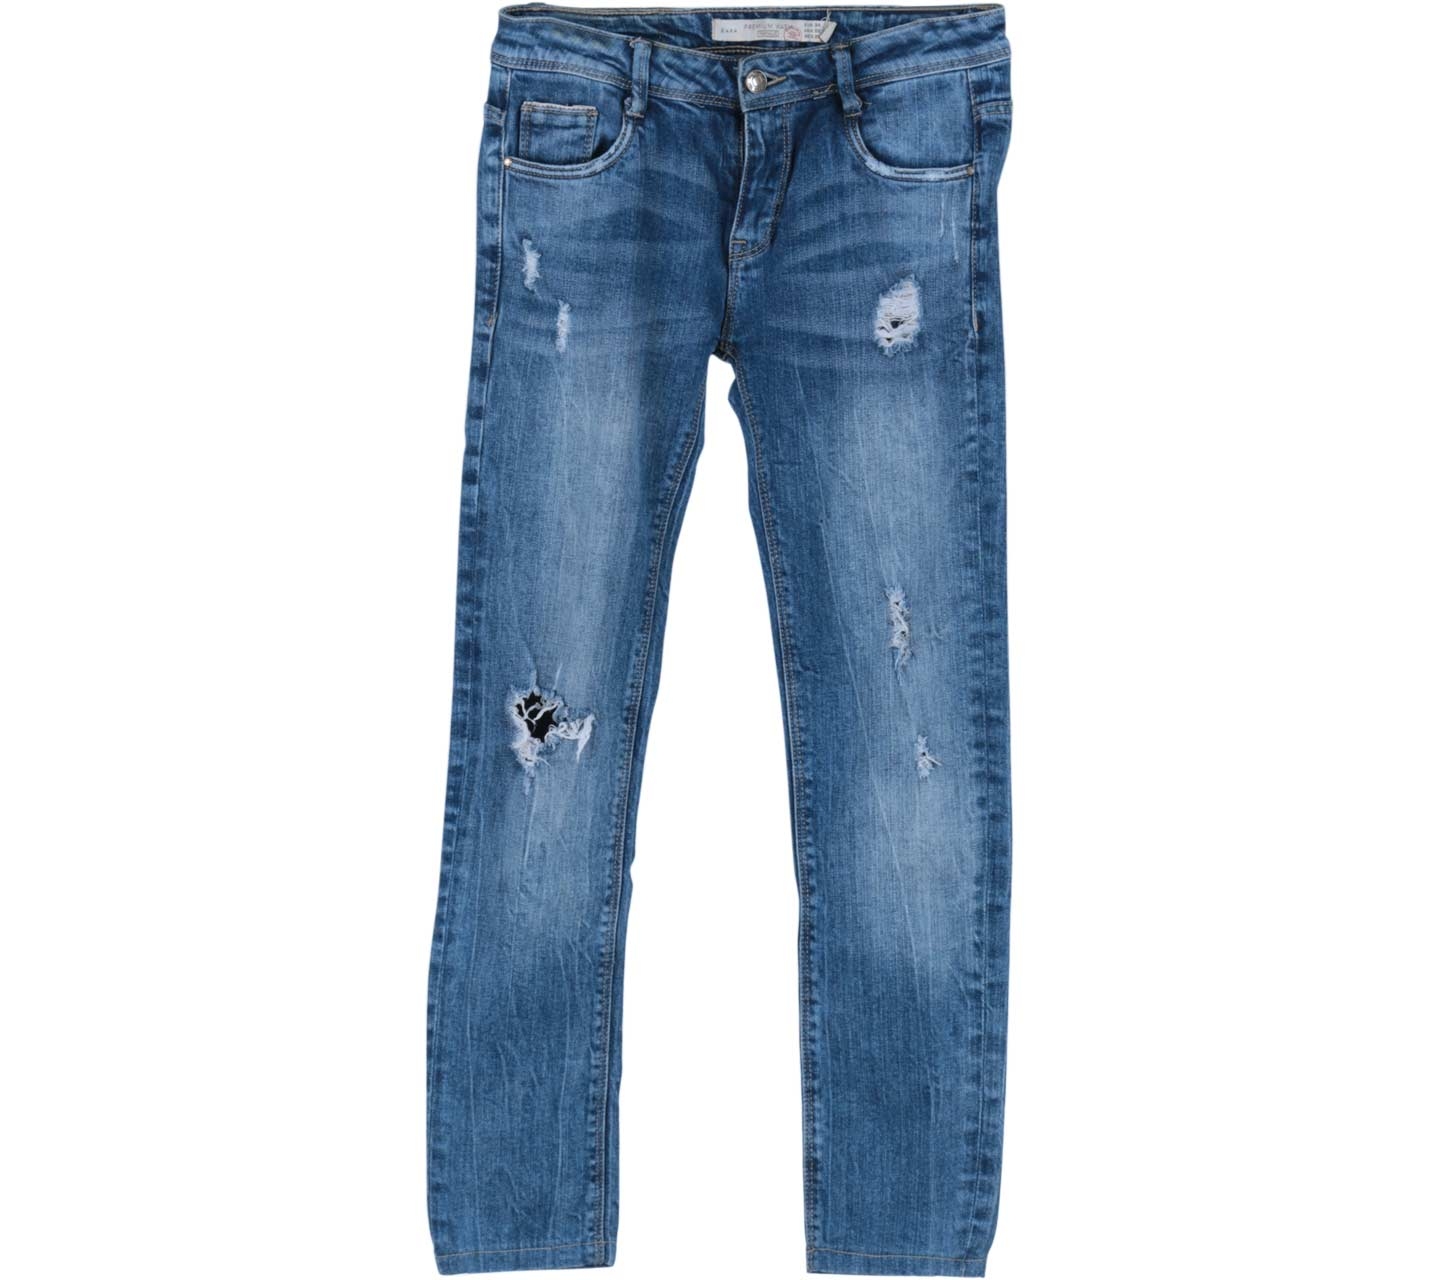 Zara Blue Ripped Jeans Pants